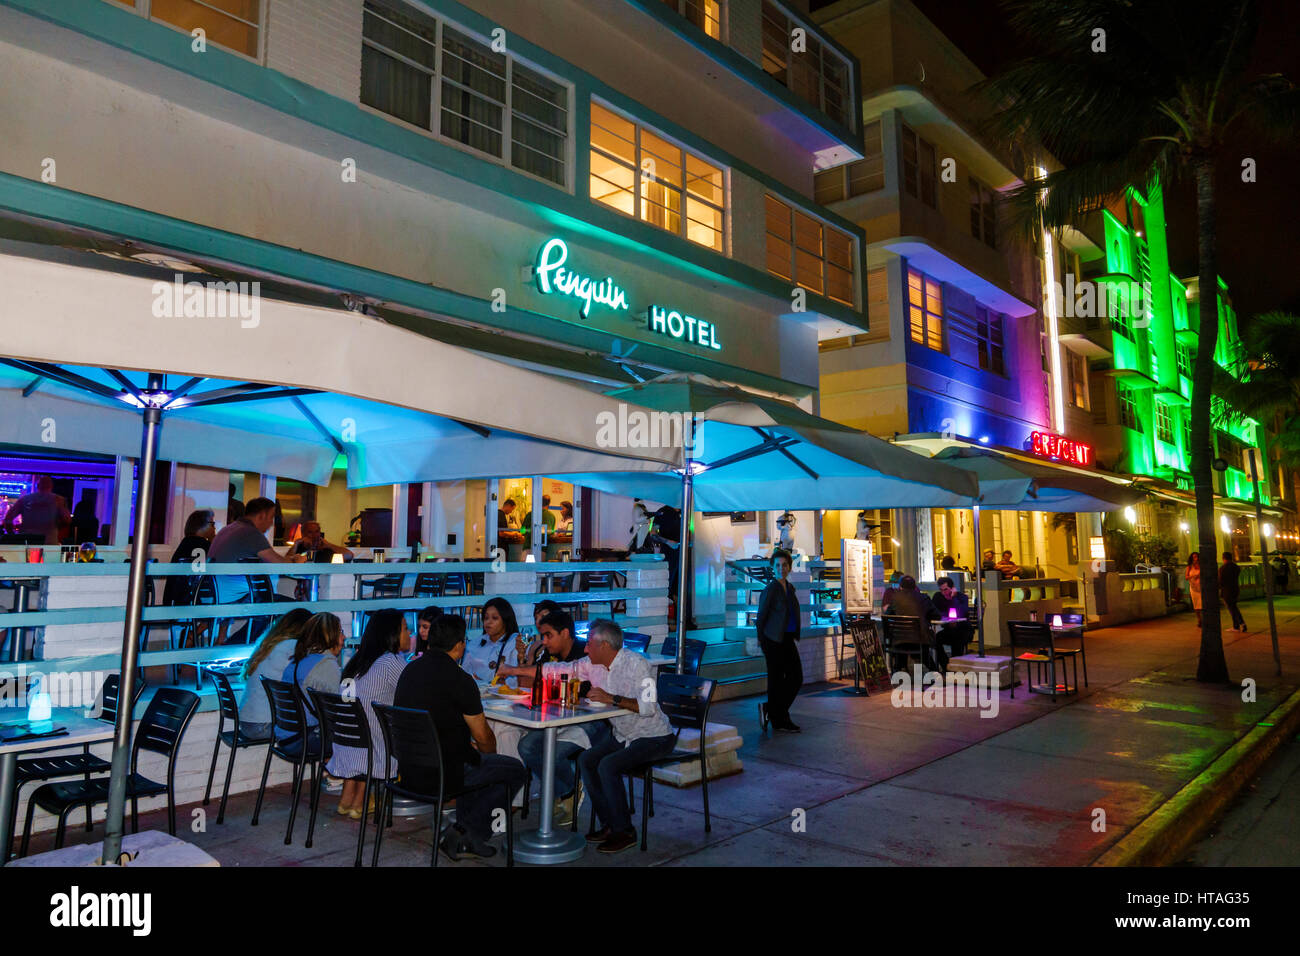 Miami Beach Florida,Ocean Drive,Art Deco Historic District,Penguin Hotel,sign,restaurant restaurants food dining cafe cafes,sidewalk cafe,al fresco si Stock Photo